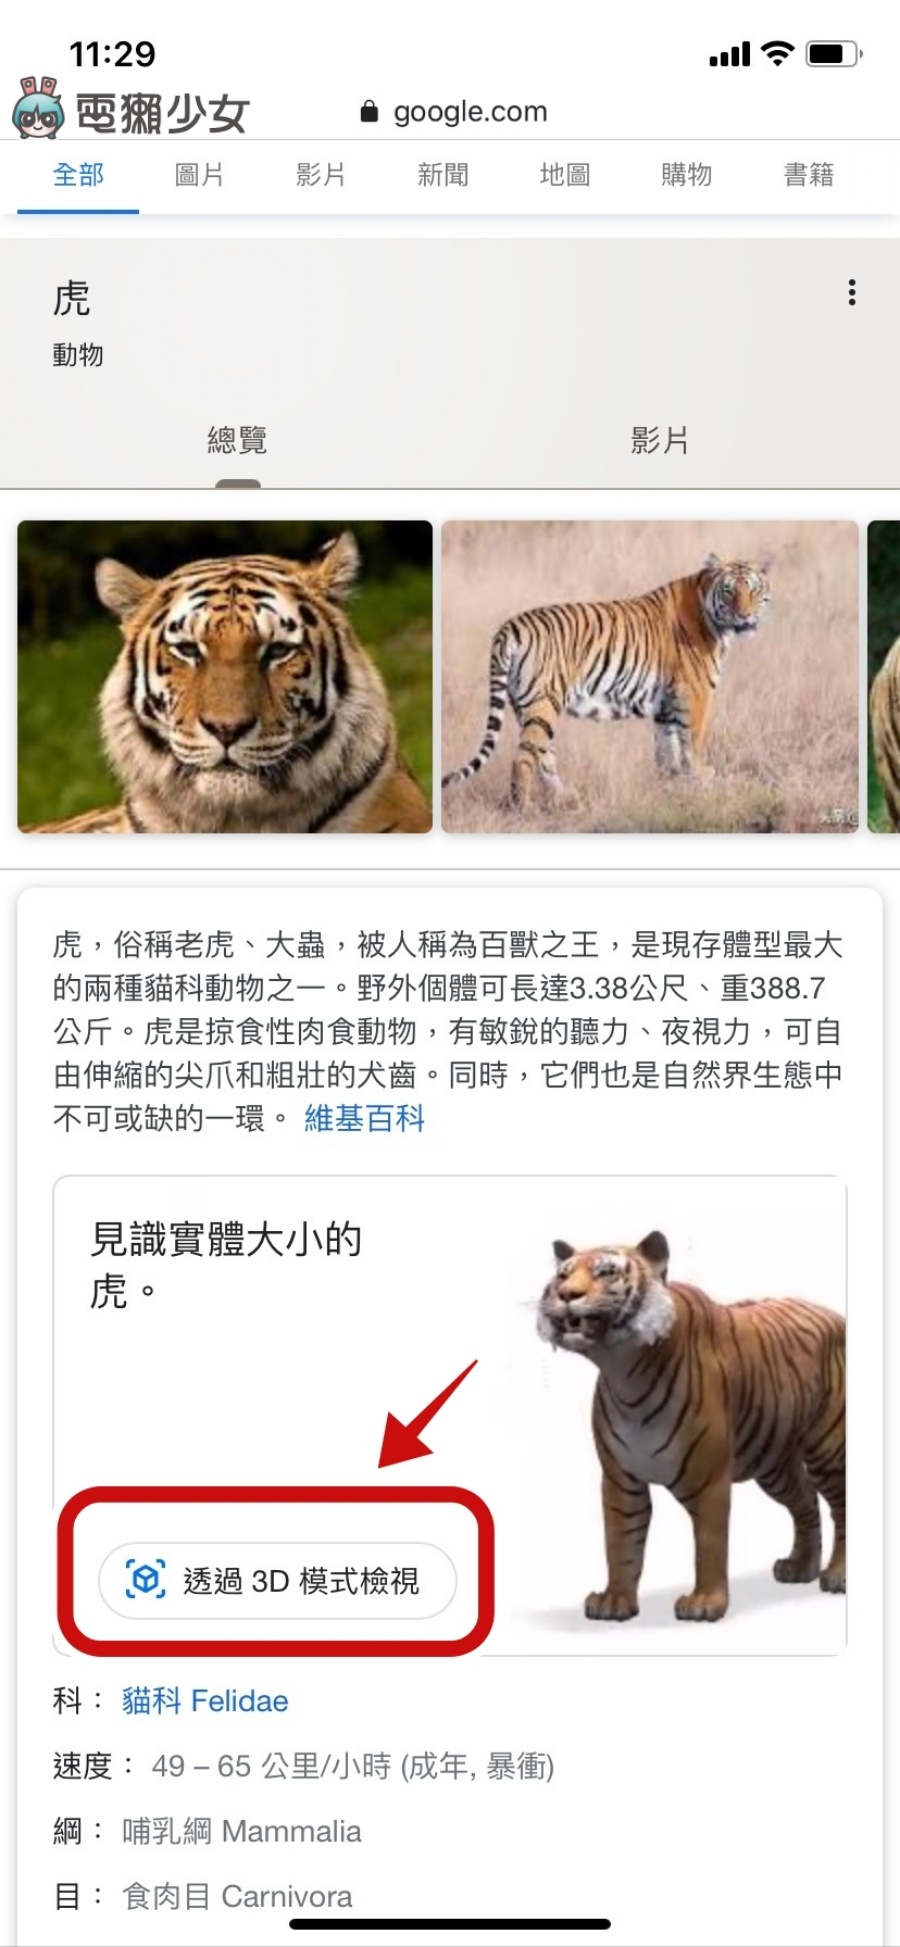 Google AR 搜尋好好玩！一秒讓家裡變成動物園 一起來跟老虎、企鵝拍照吧！